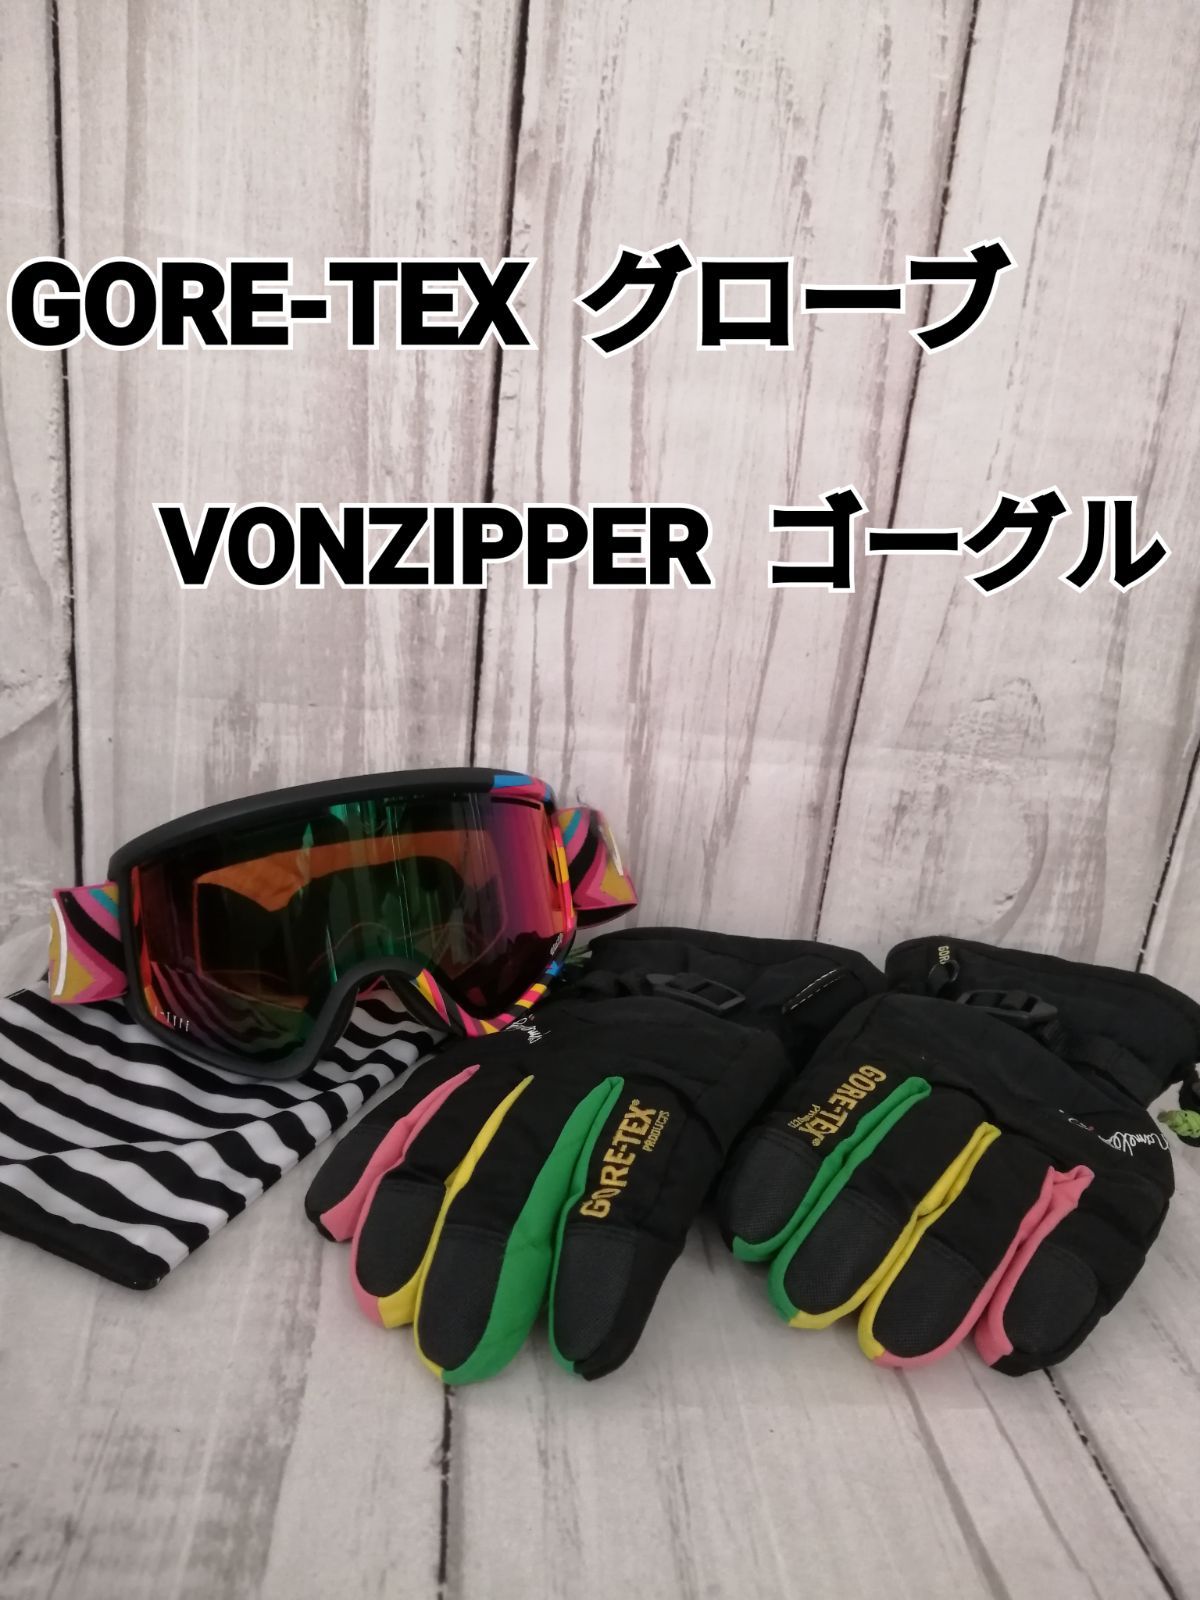 GORE-TEX ゴアテックス VONZIPPER ボンジッパー グローブ ゴーグル